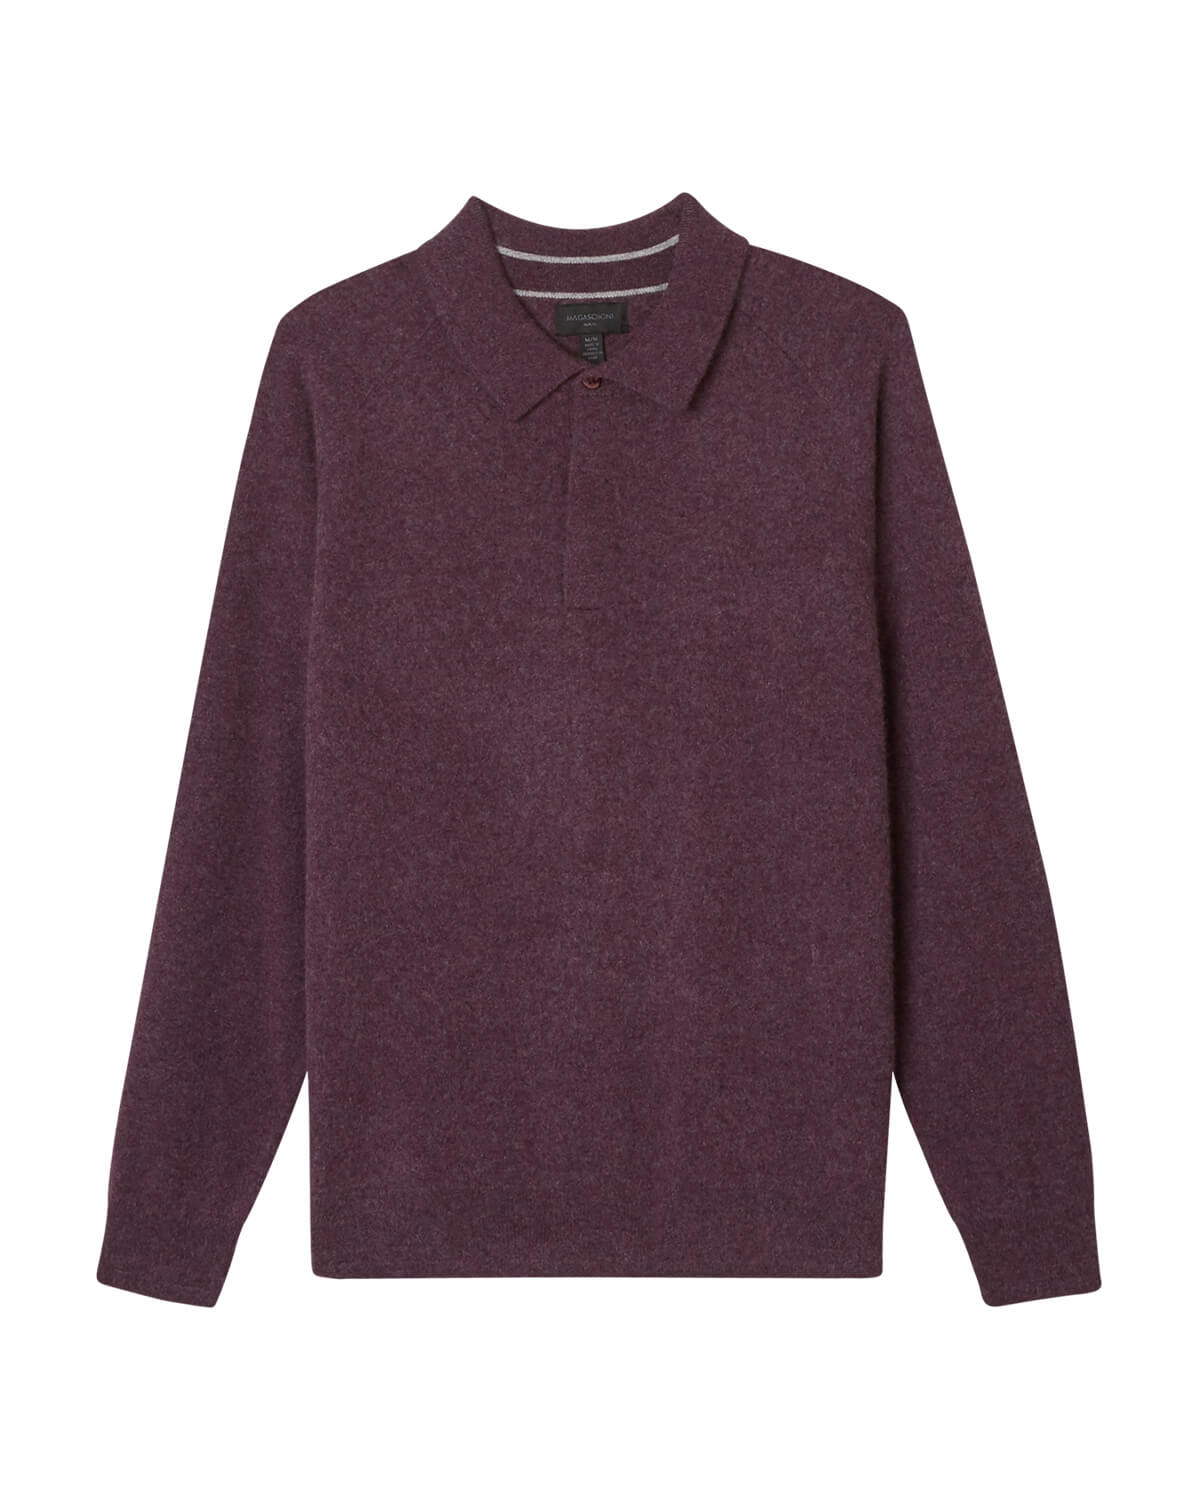 Shop Men's Cashmere Rib Trim Sweater Polo | Magaschoni Men's | JANE + MERCER